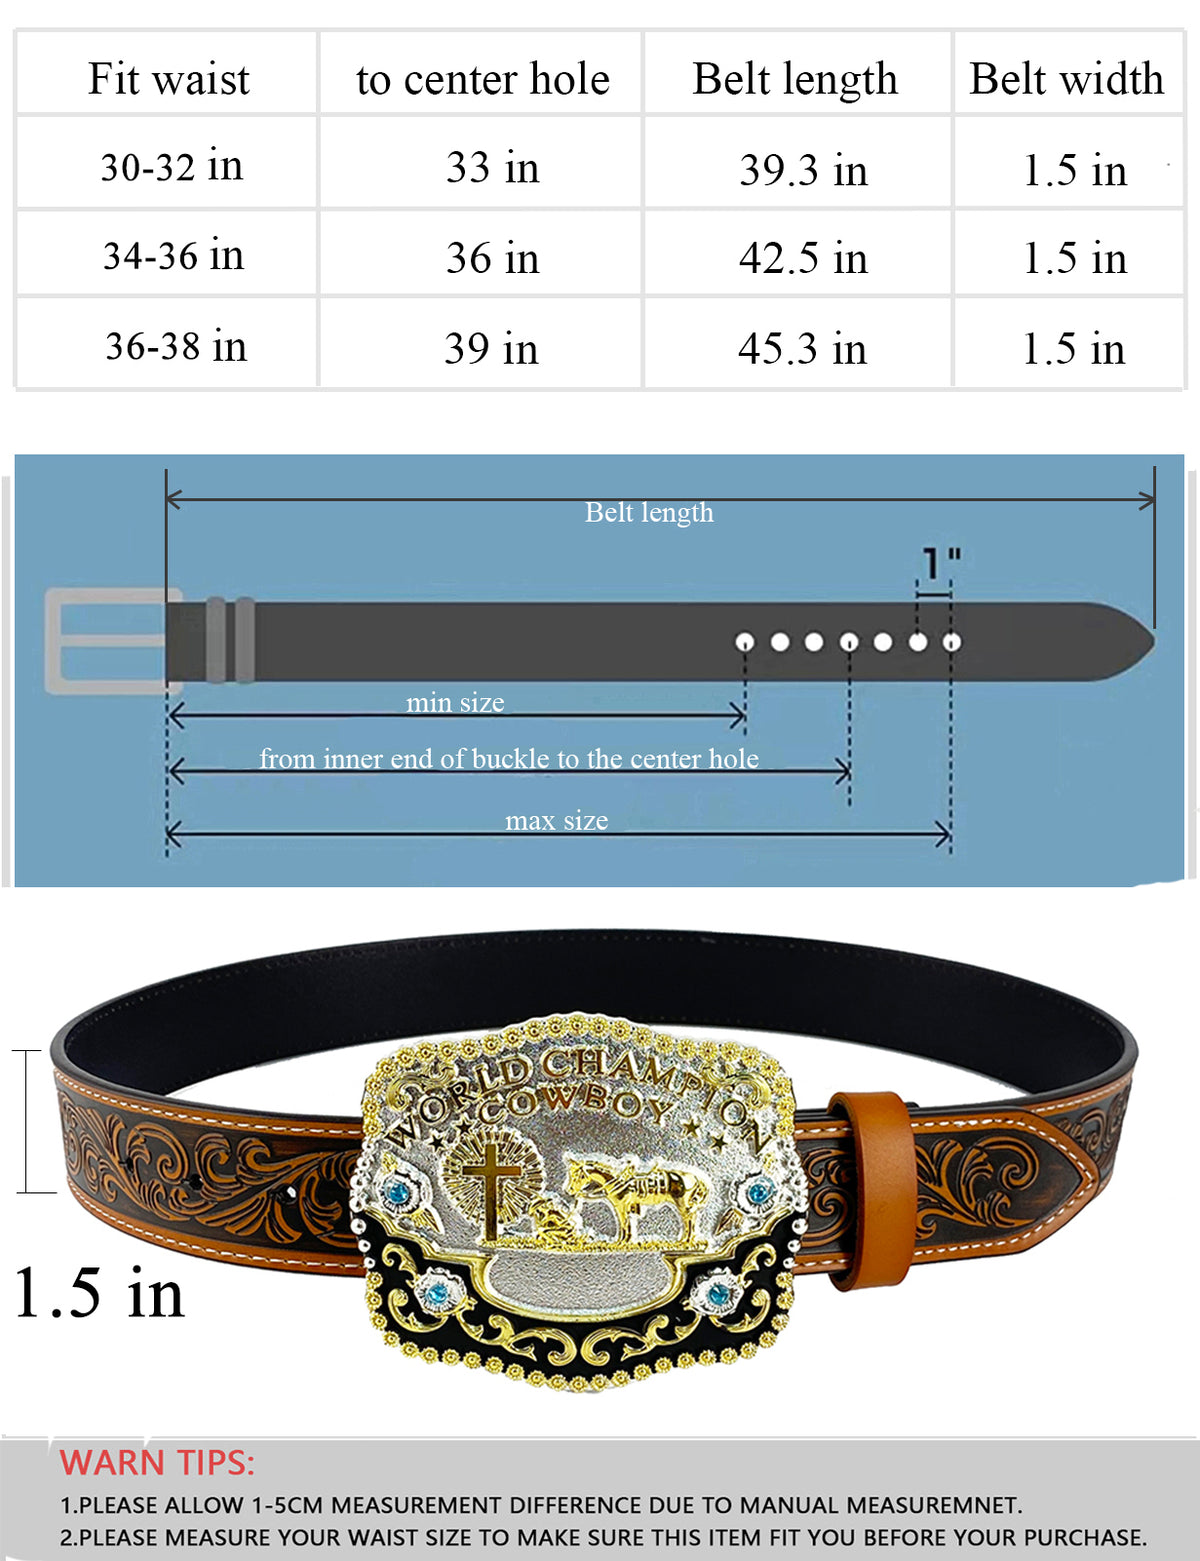 TOPACC Western Genuine Leather Pattern Tooled Belt-3D Cross Horses Prayer 'world champion cowboy' Buckle